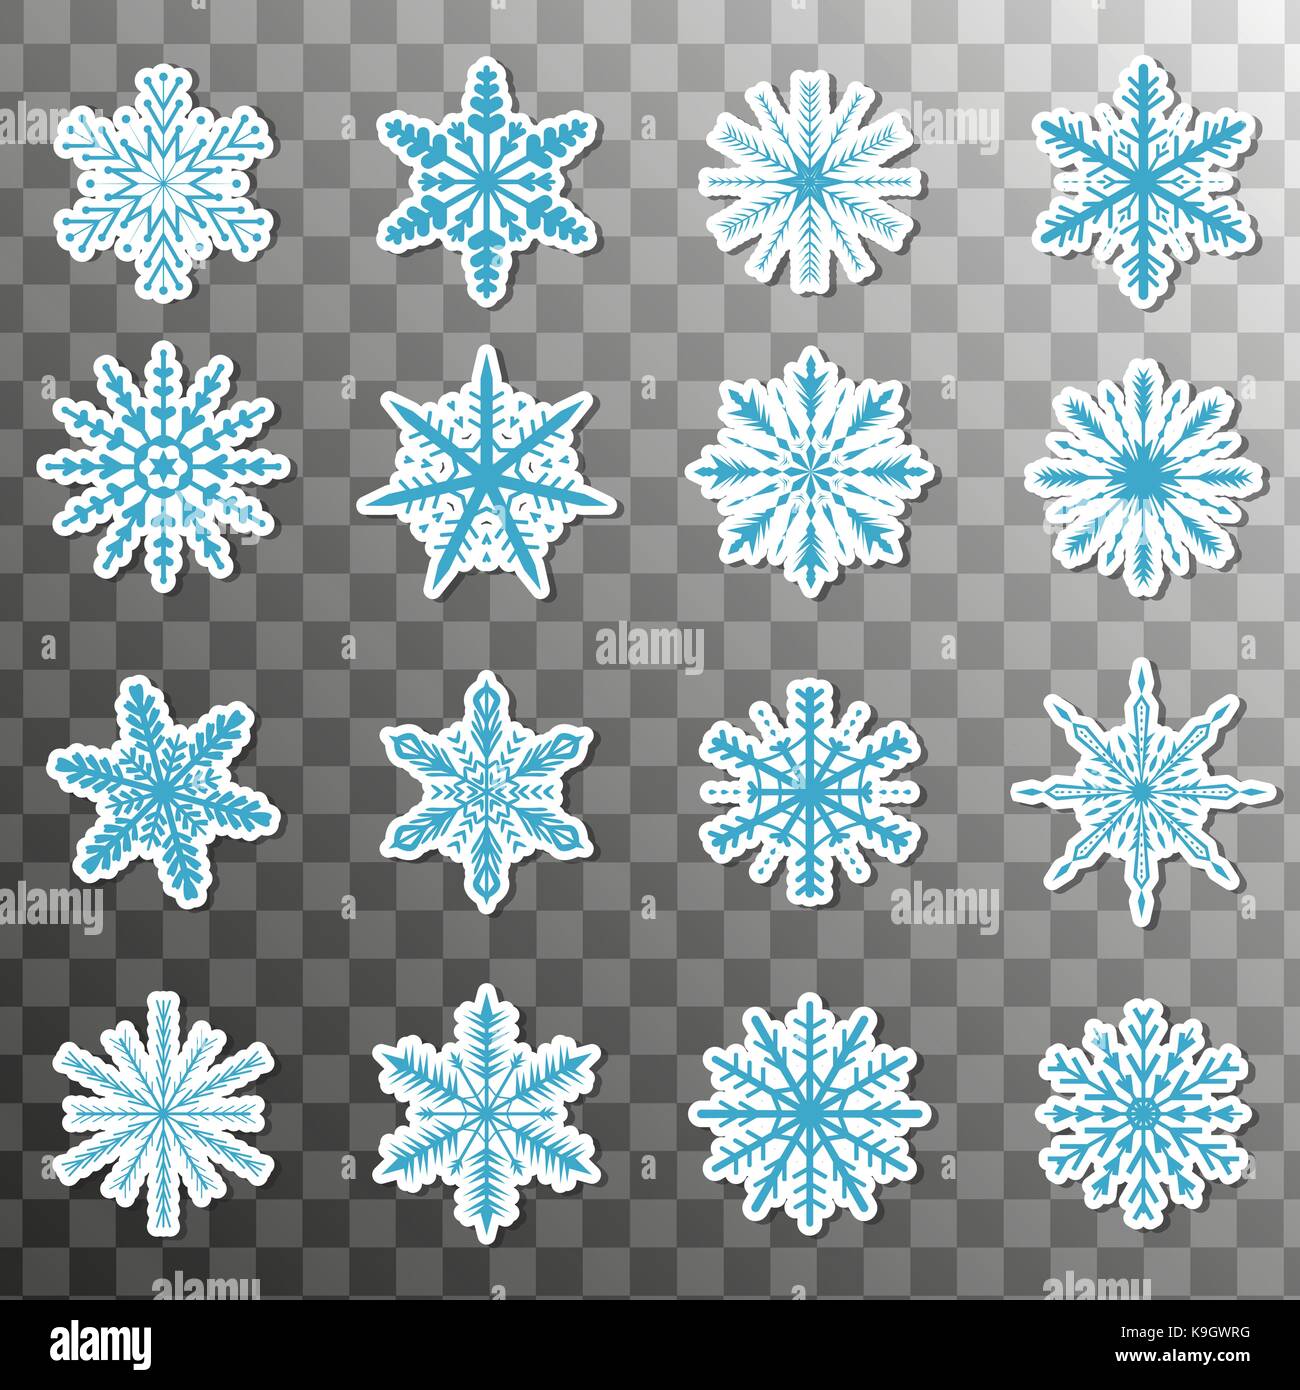 Snowflake Stickers Snow Stickers Winter Stickers Snowflakes